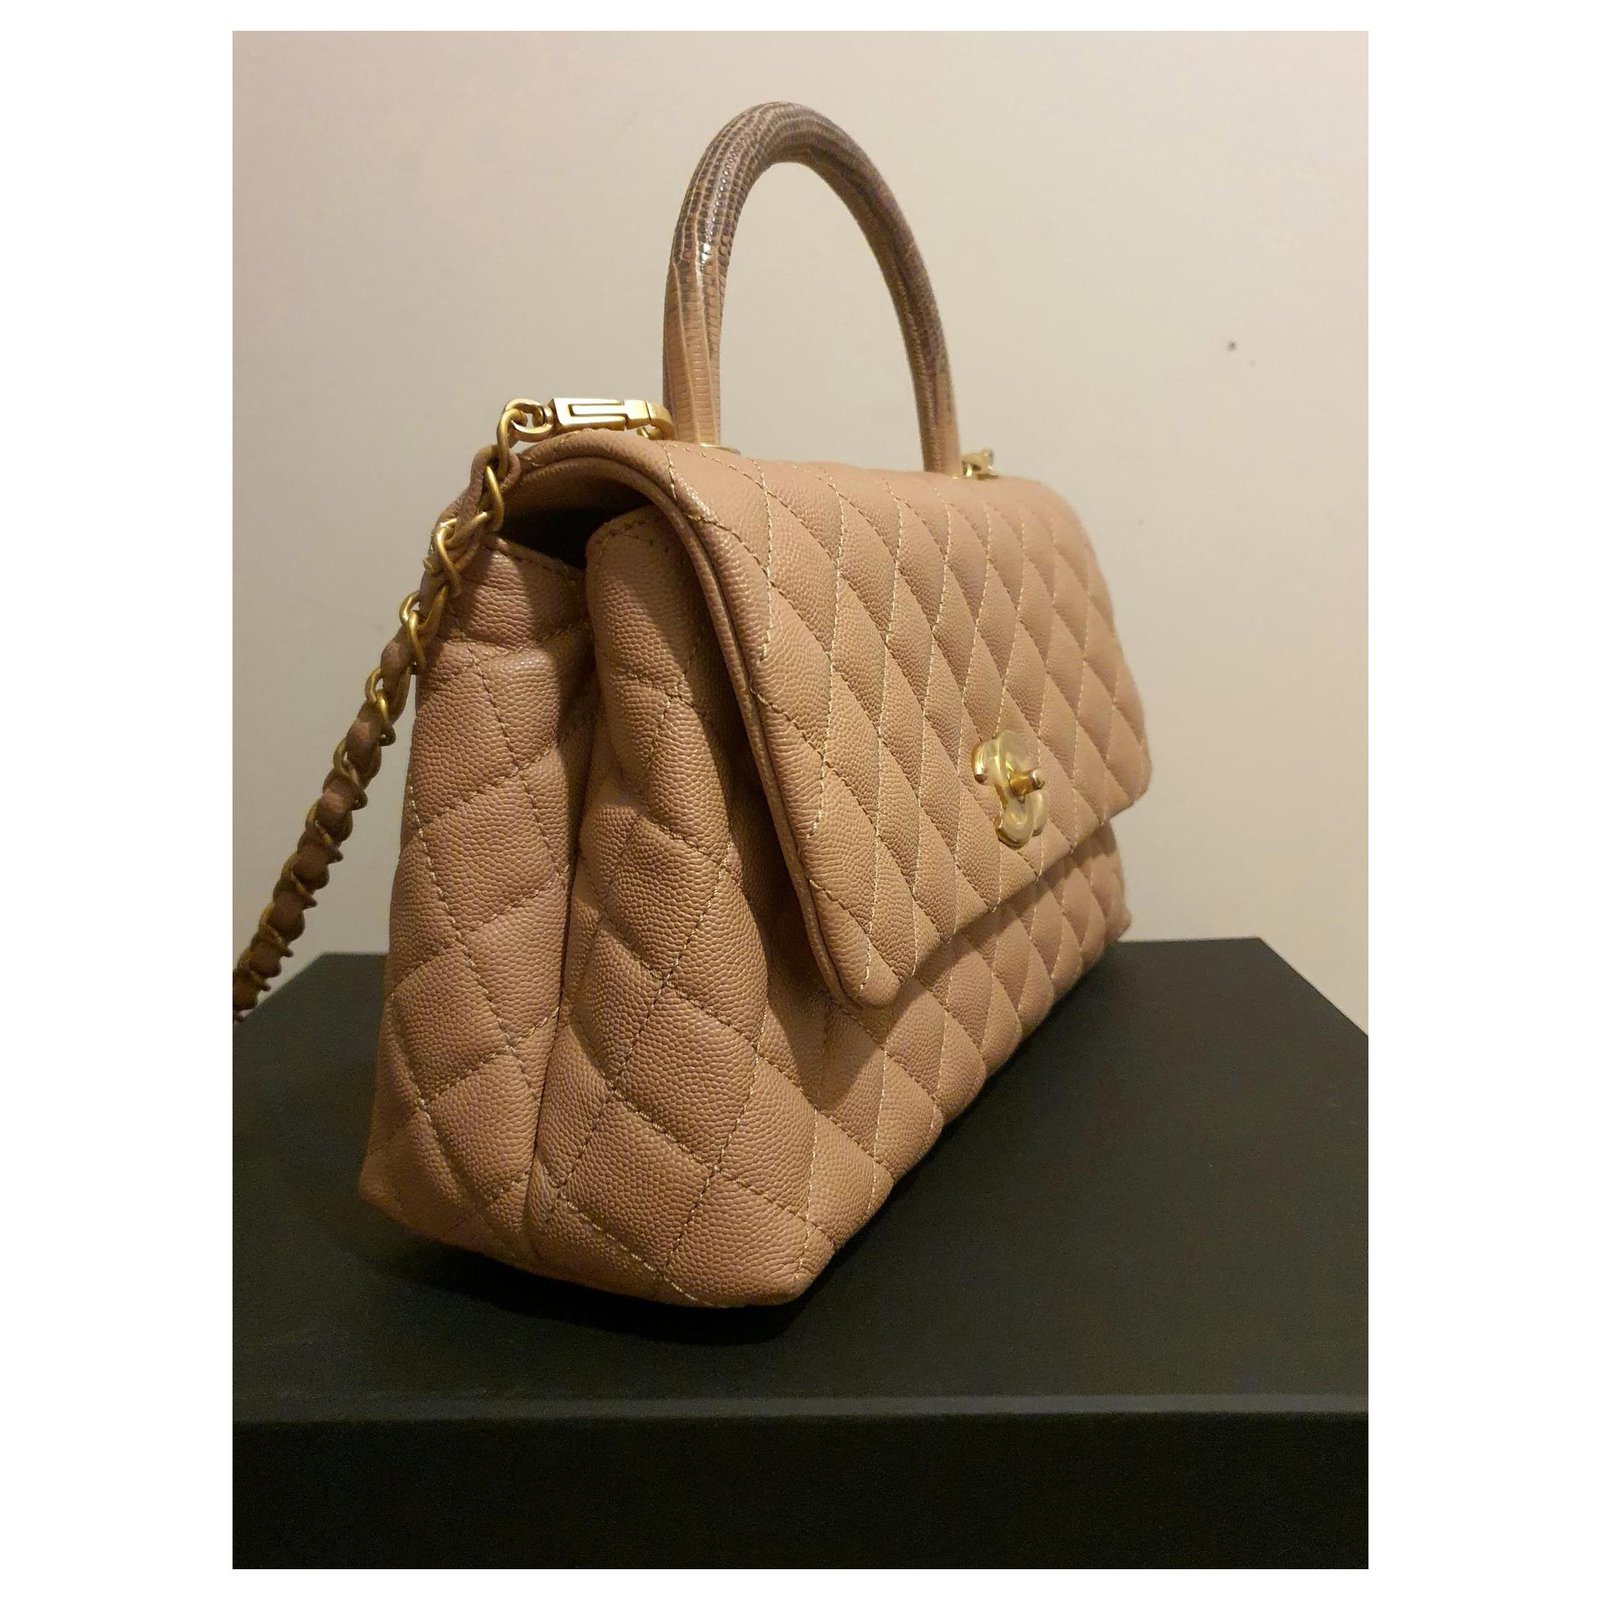 SOLD* 1730-1168 Beige/Burgundy Lizard Leather 29cm Coco Handle Bag